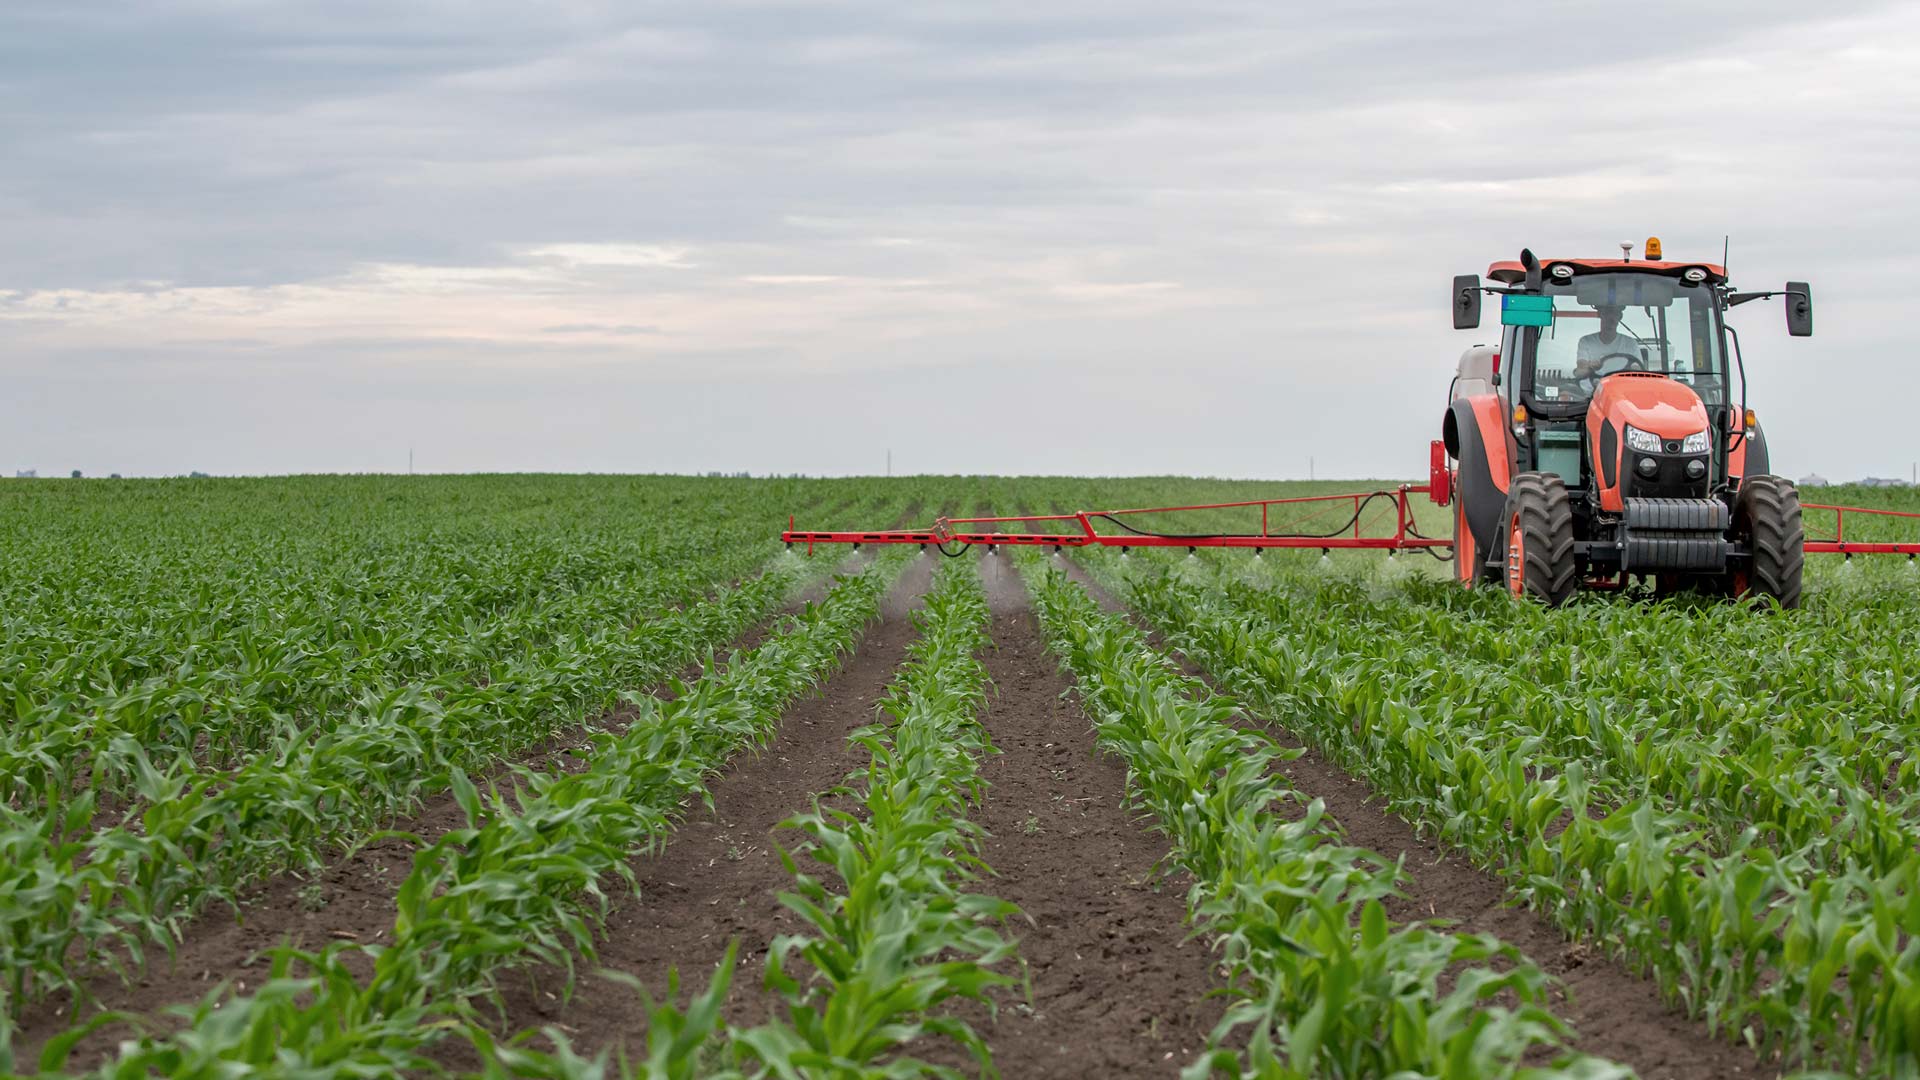 Tractor spraying fertilizer in corn field